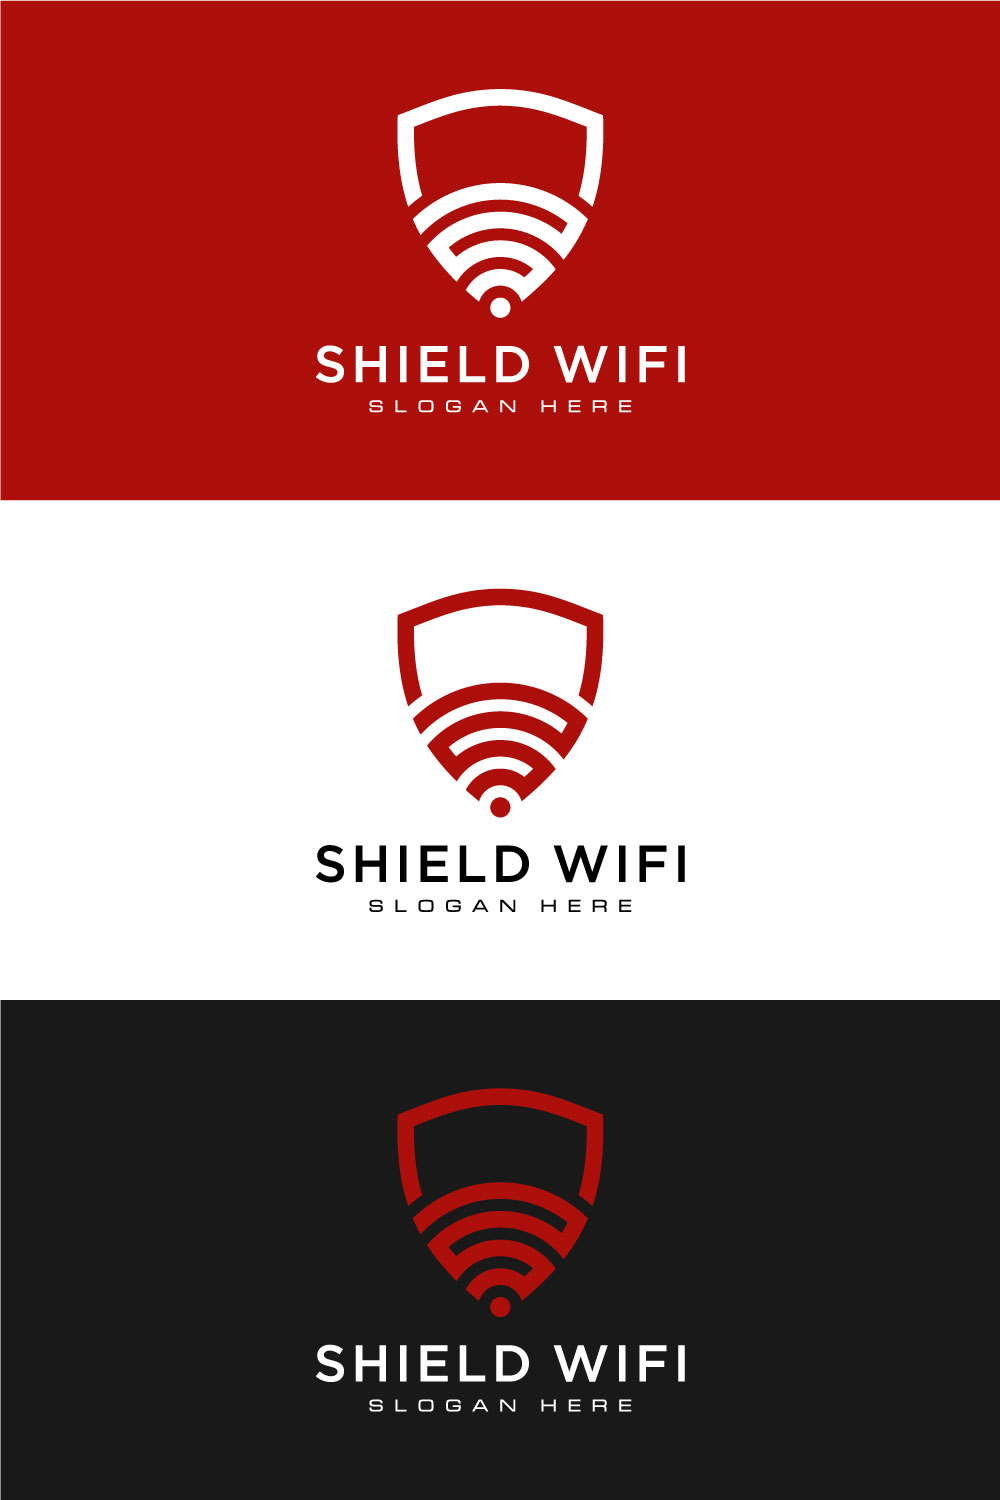 Shield Wifi Logo Design Pinterest Image.